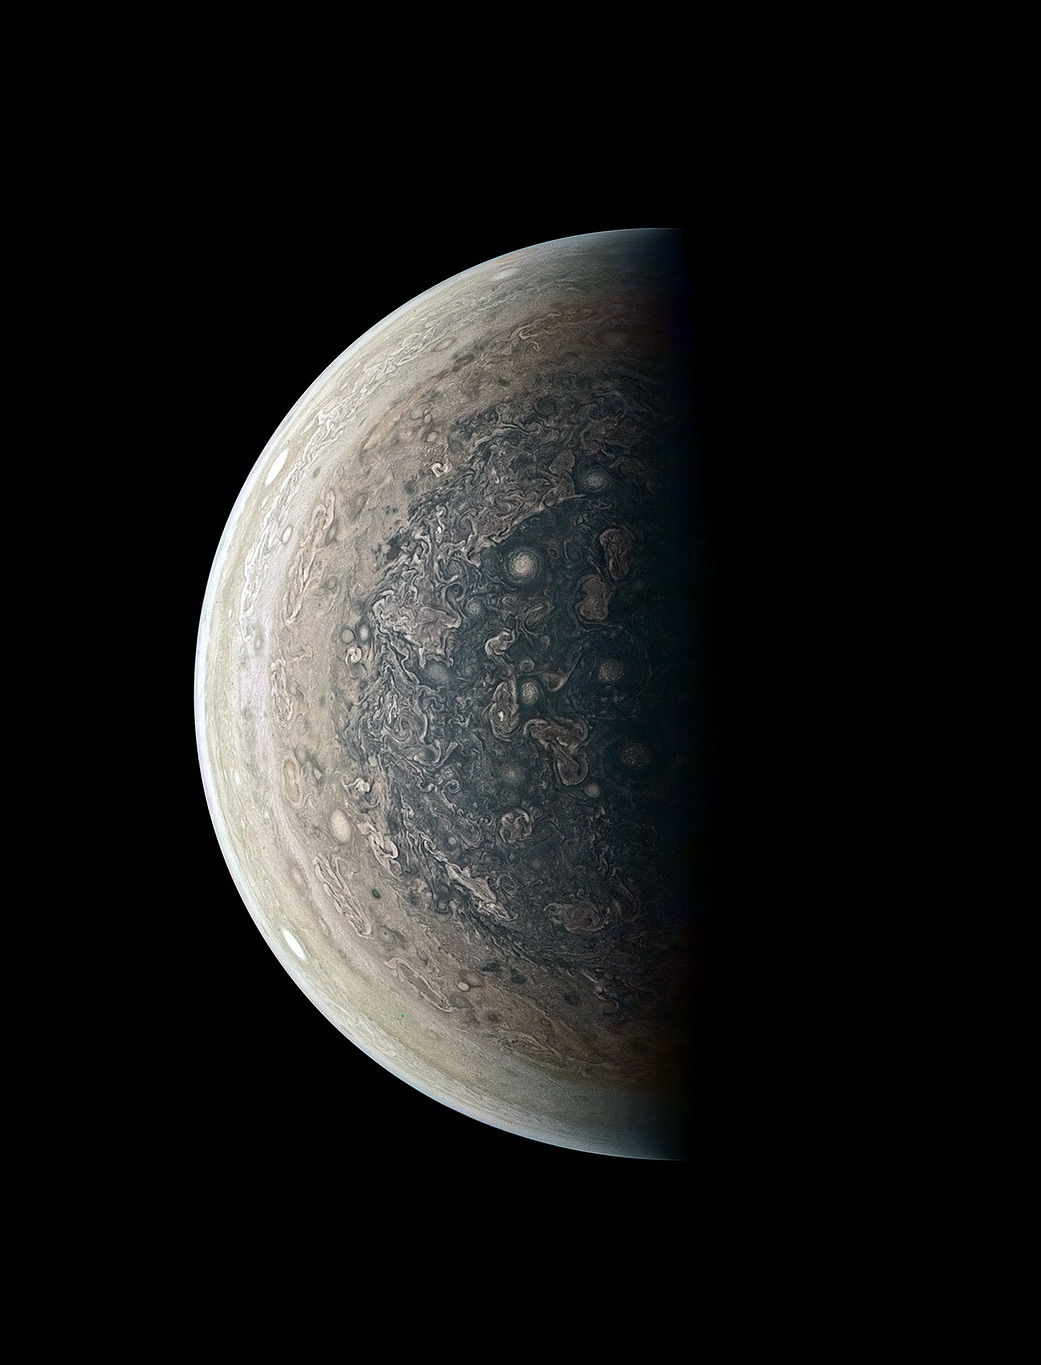 Jupiter's South Pole Swirls with Cyclones in Stunning NASA Photo